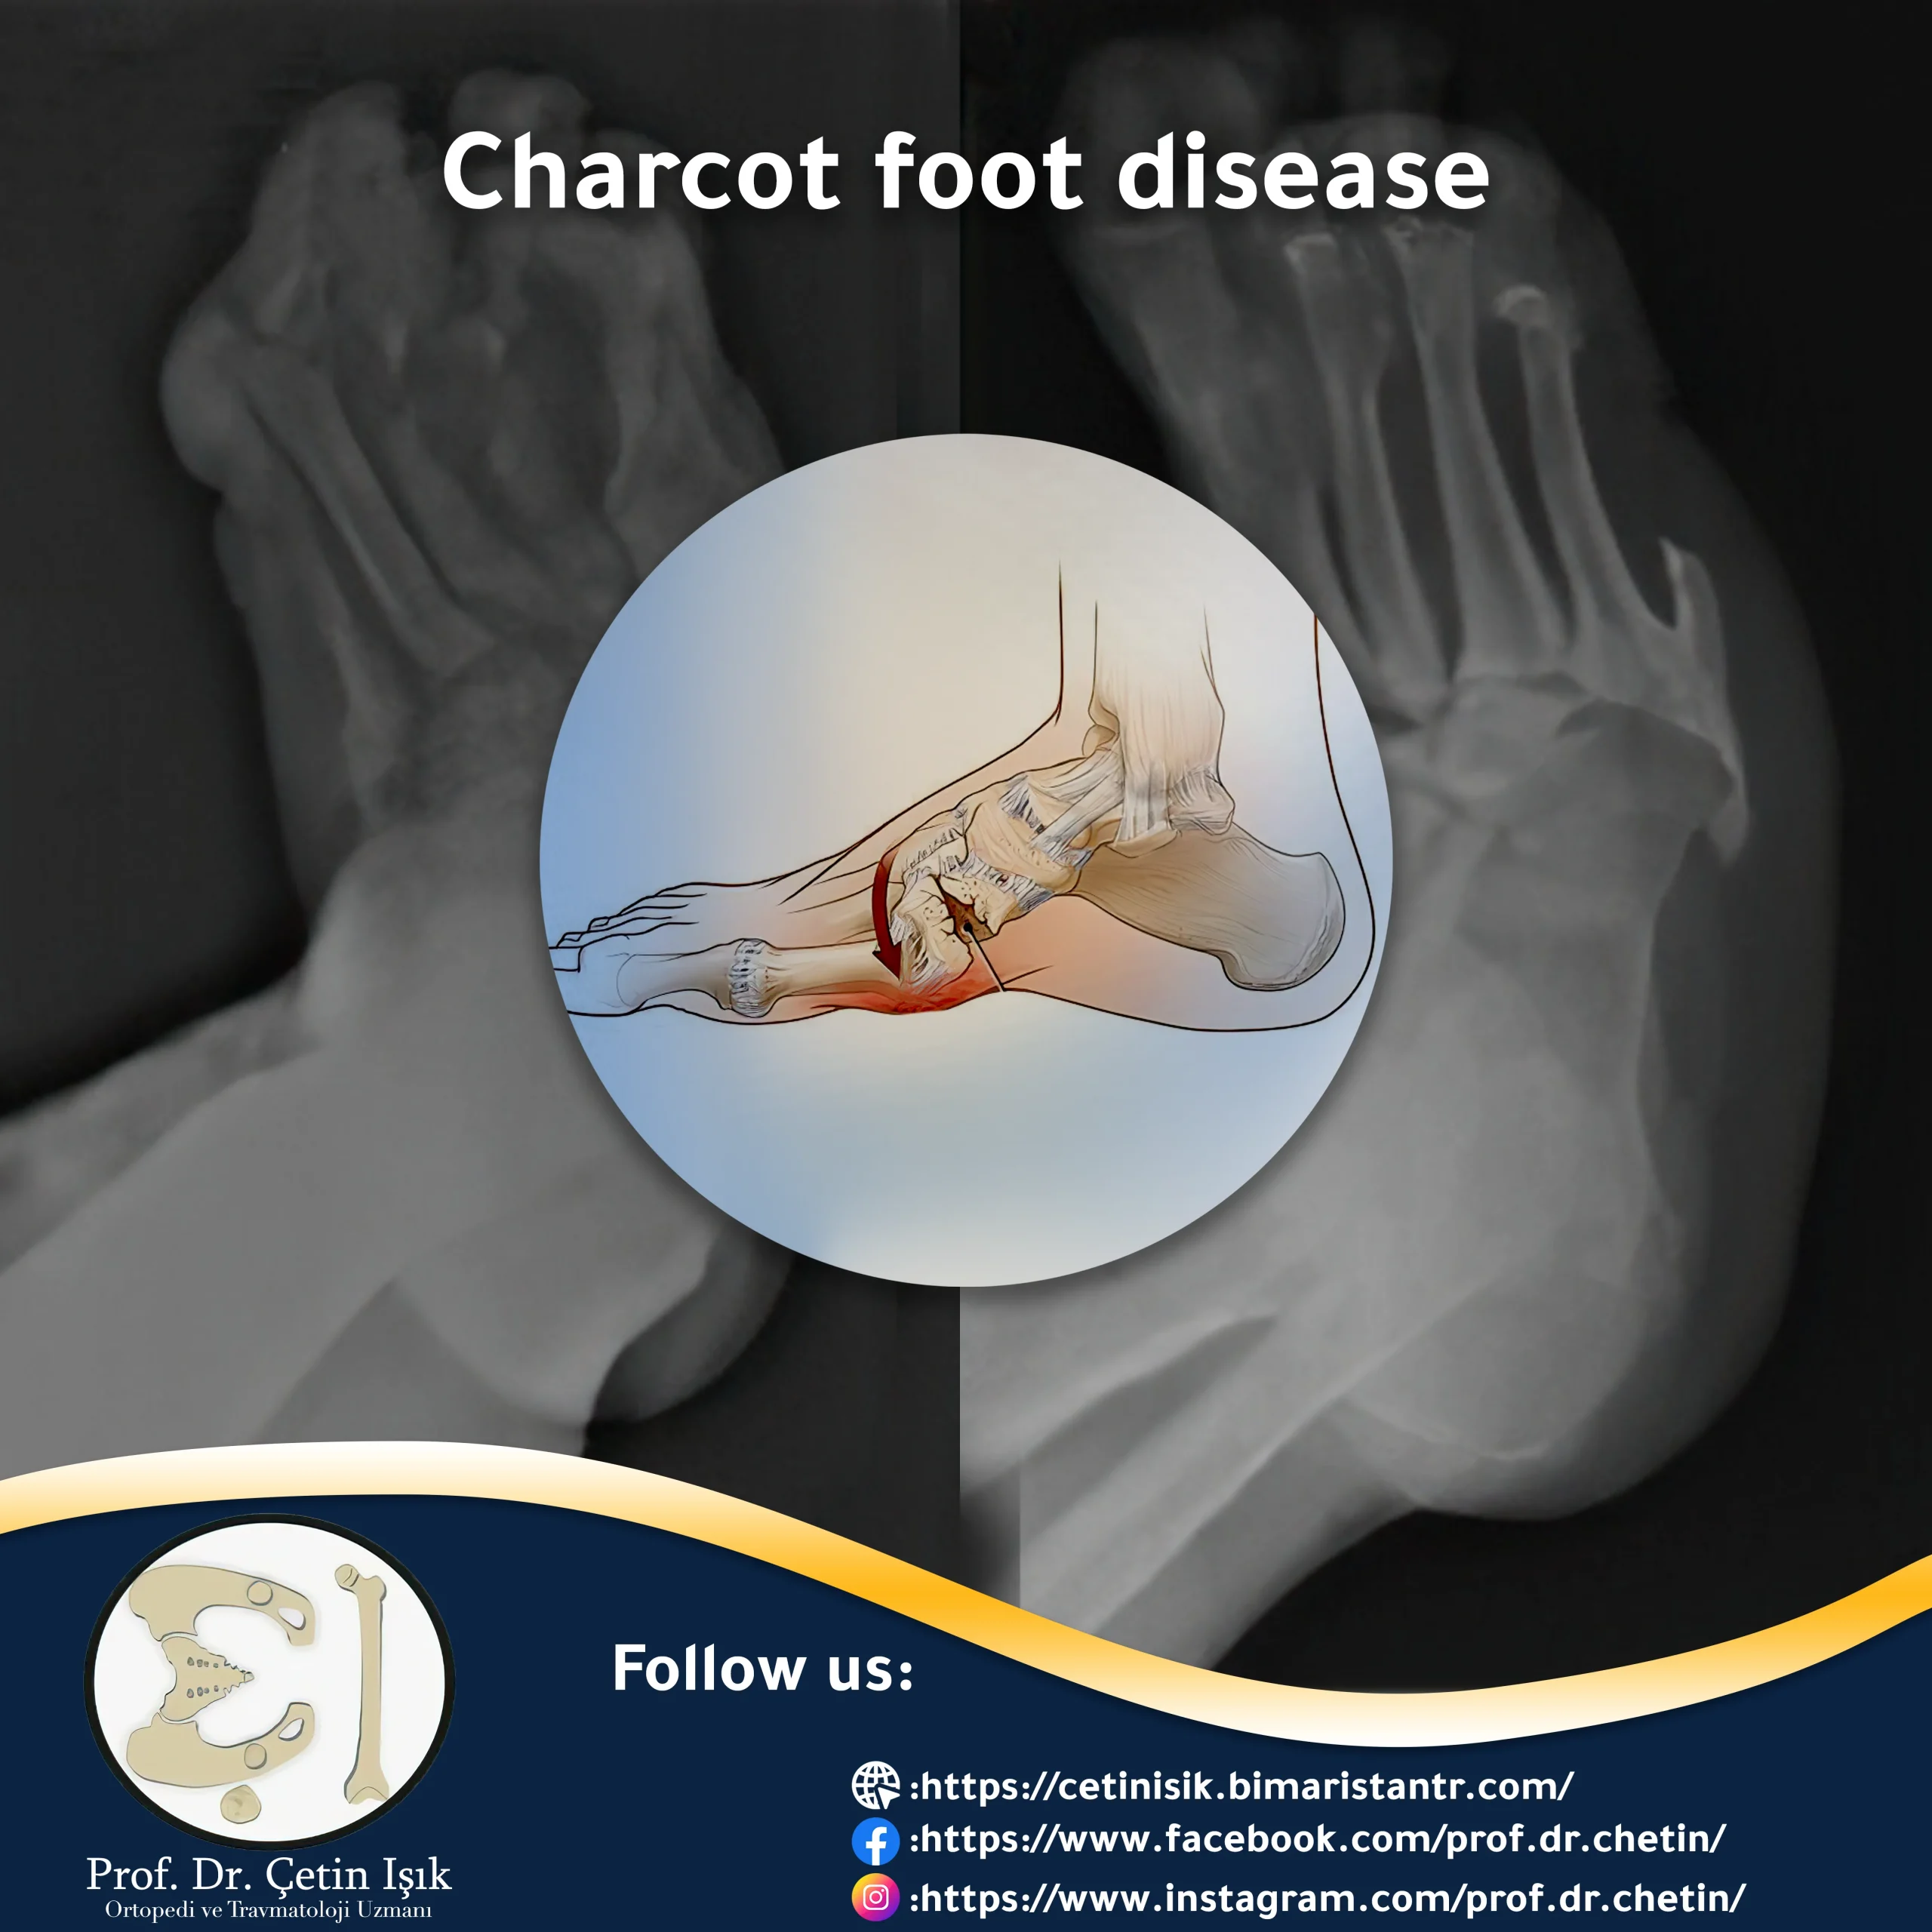 Charcot's foot disease